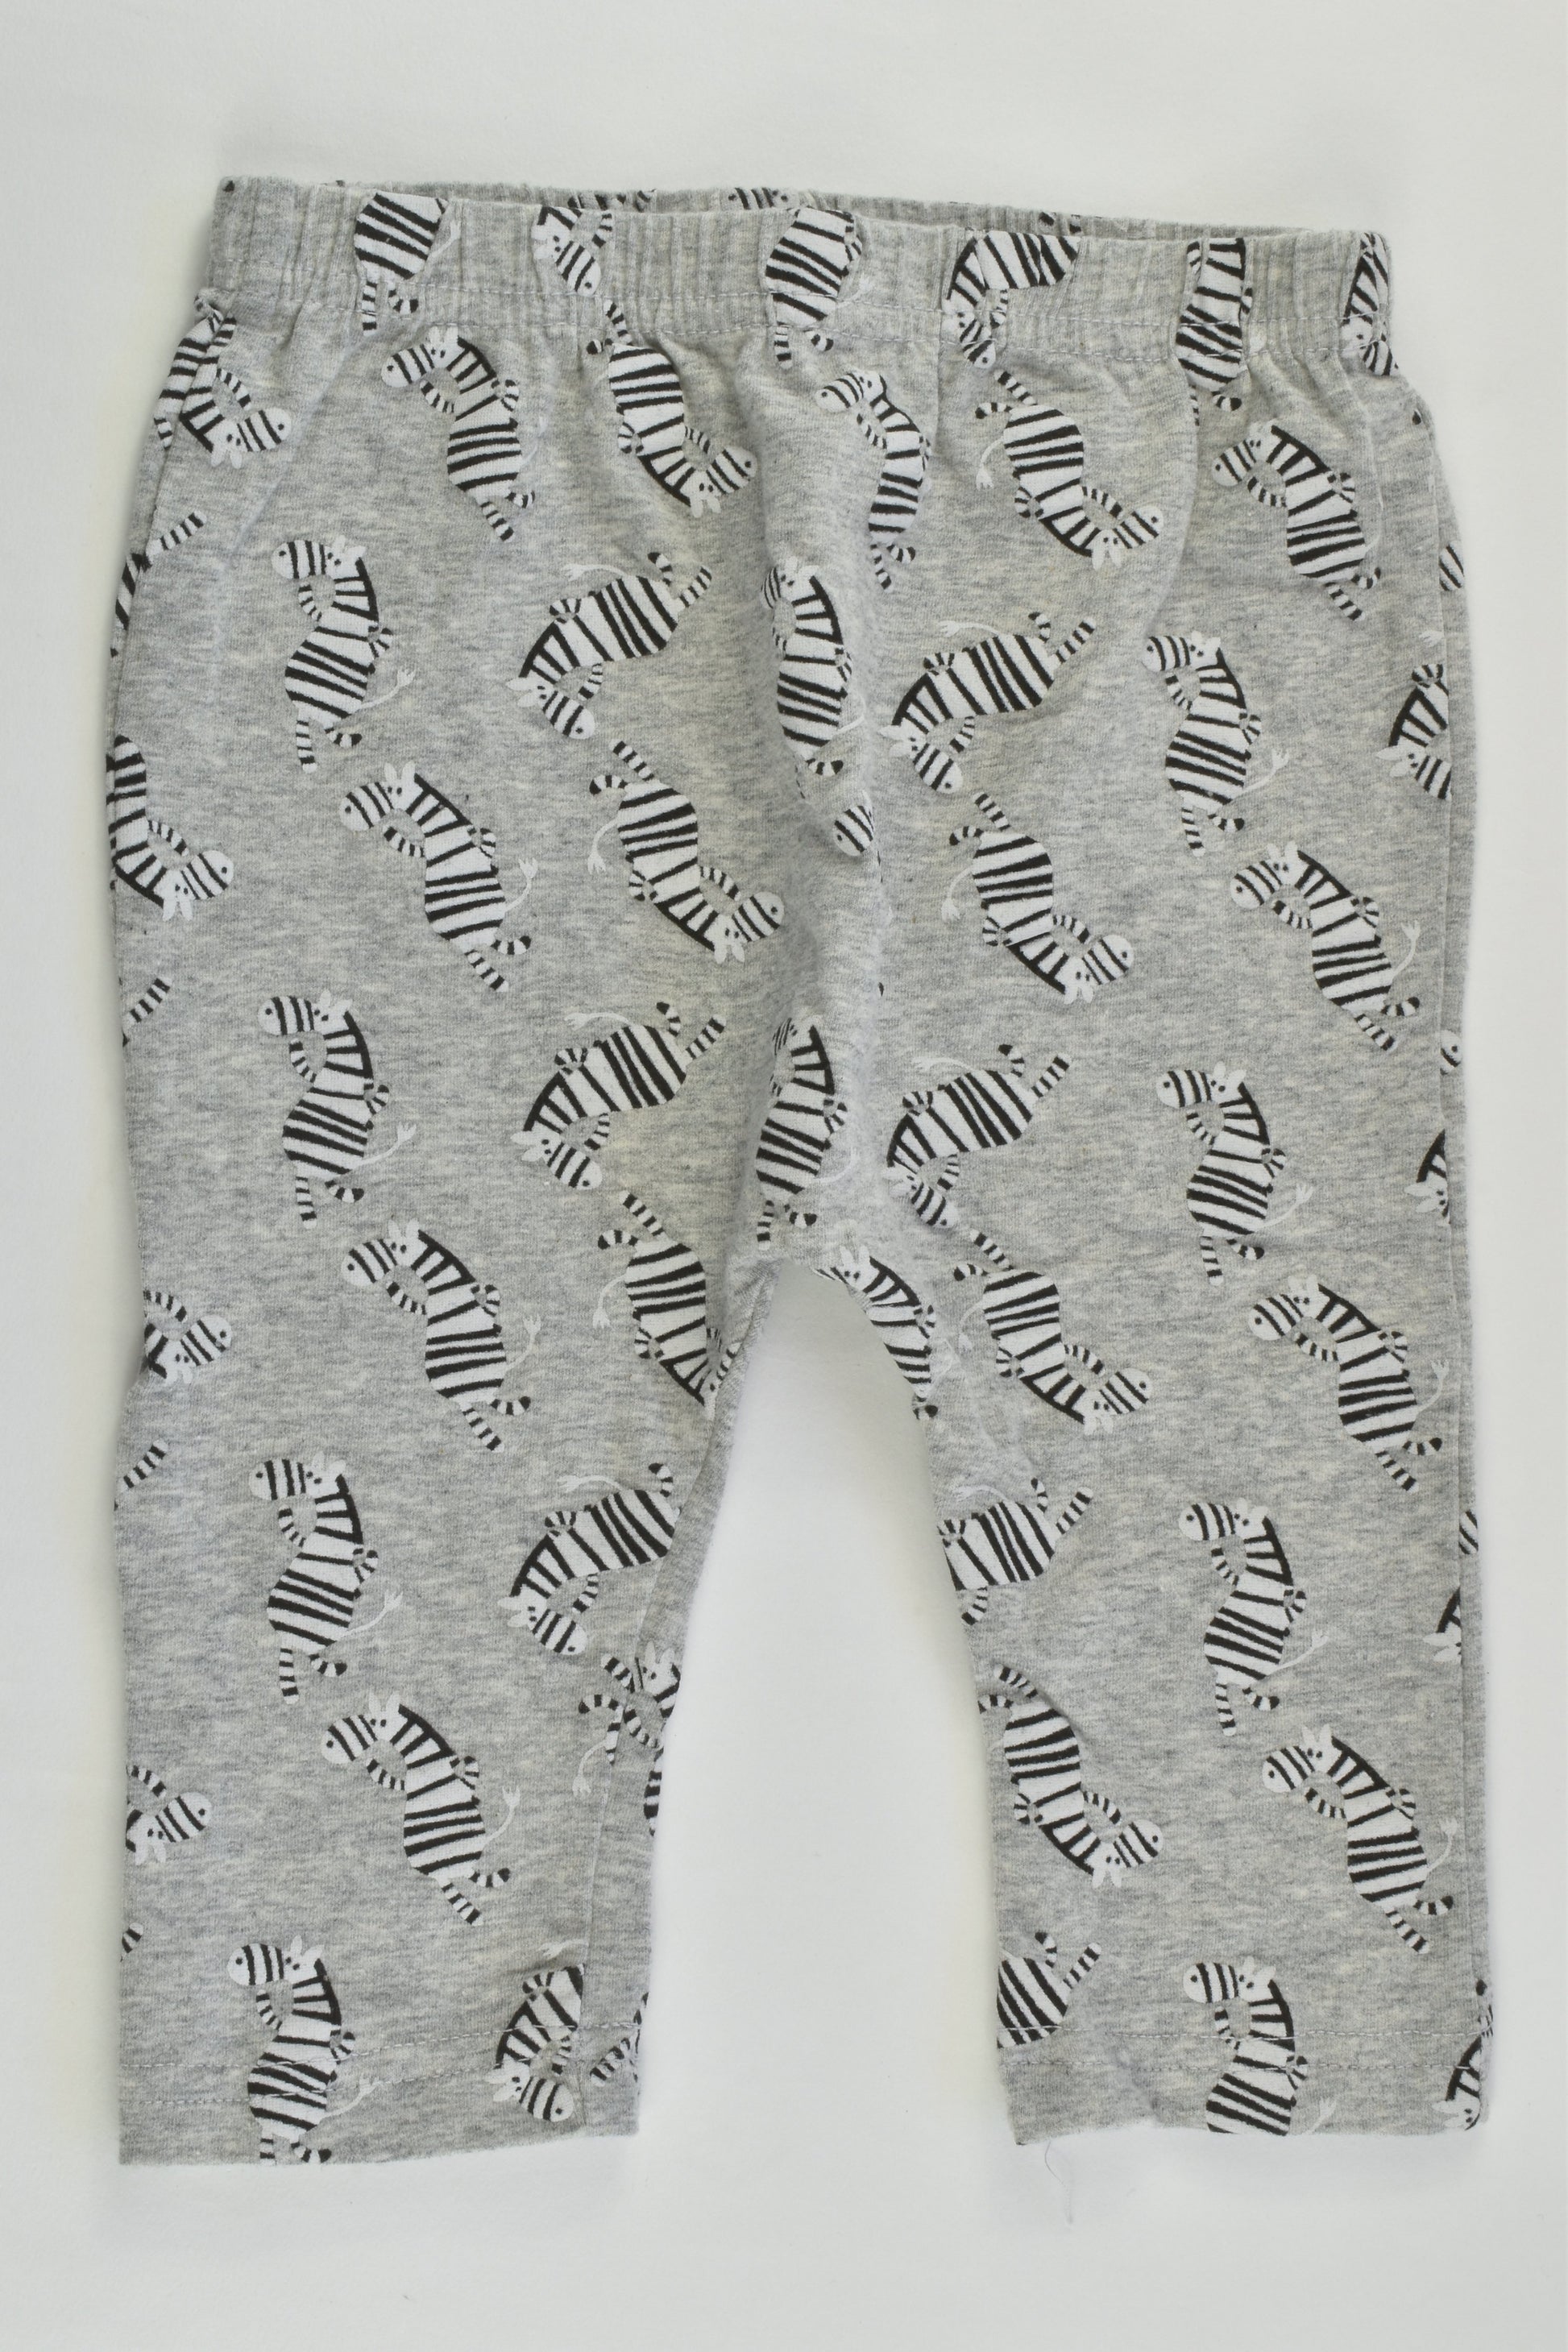 Gingerlilly (AU) Size 00 (3-6 months) Zebra Pants